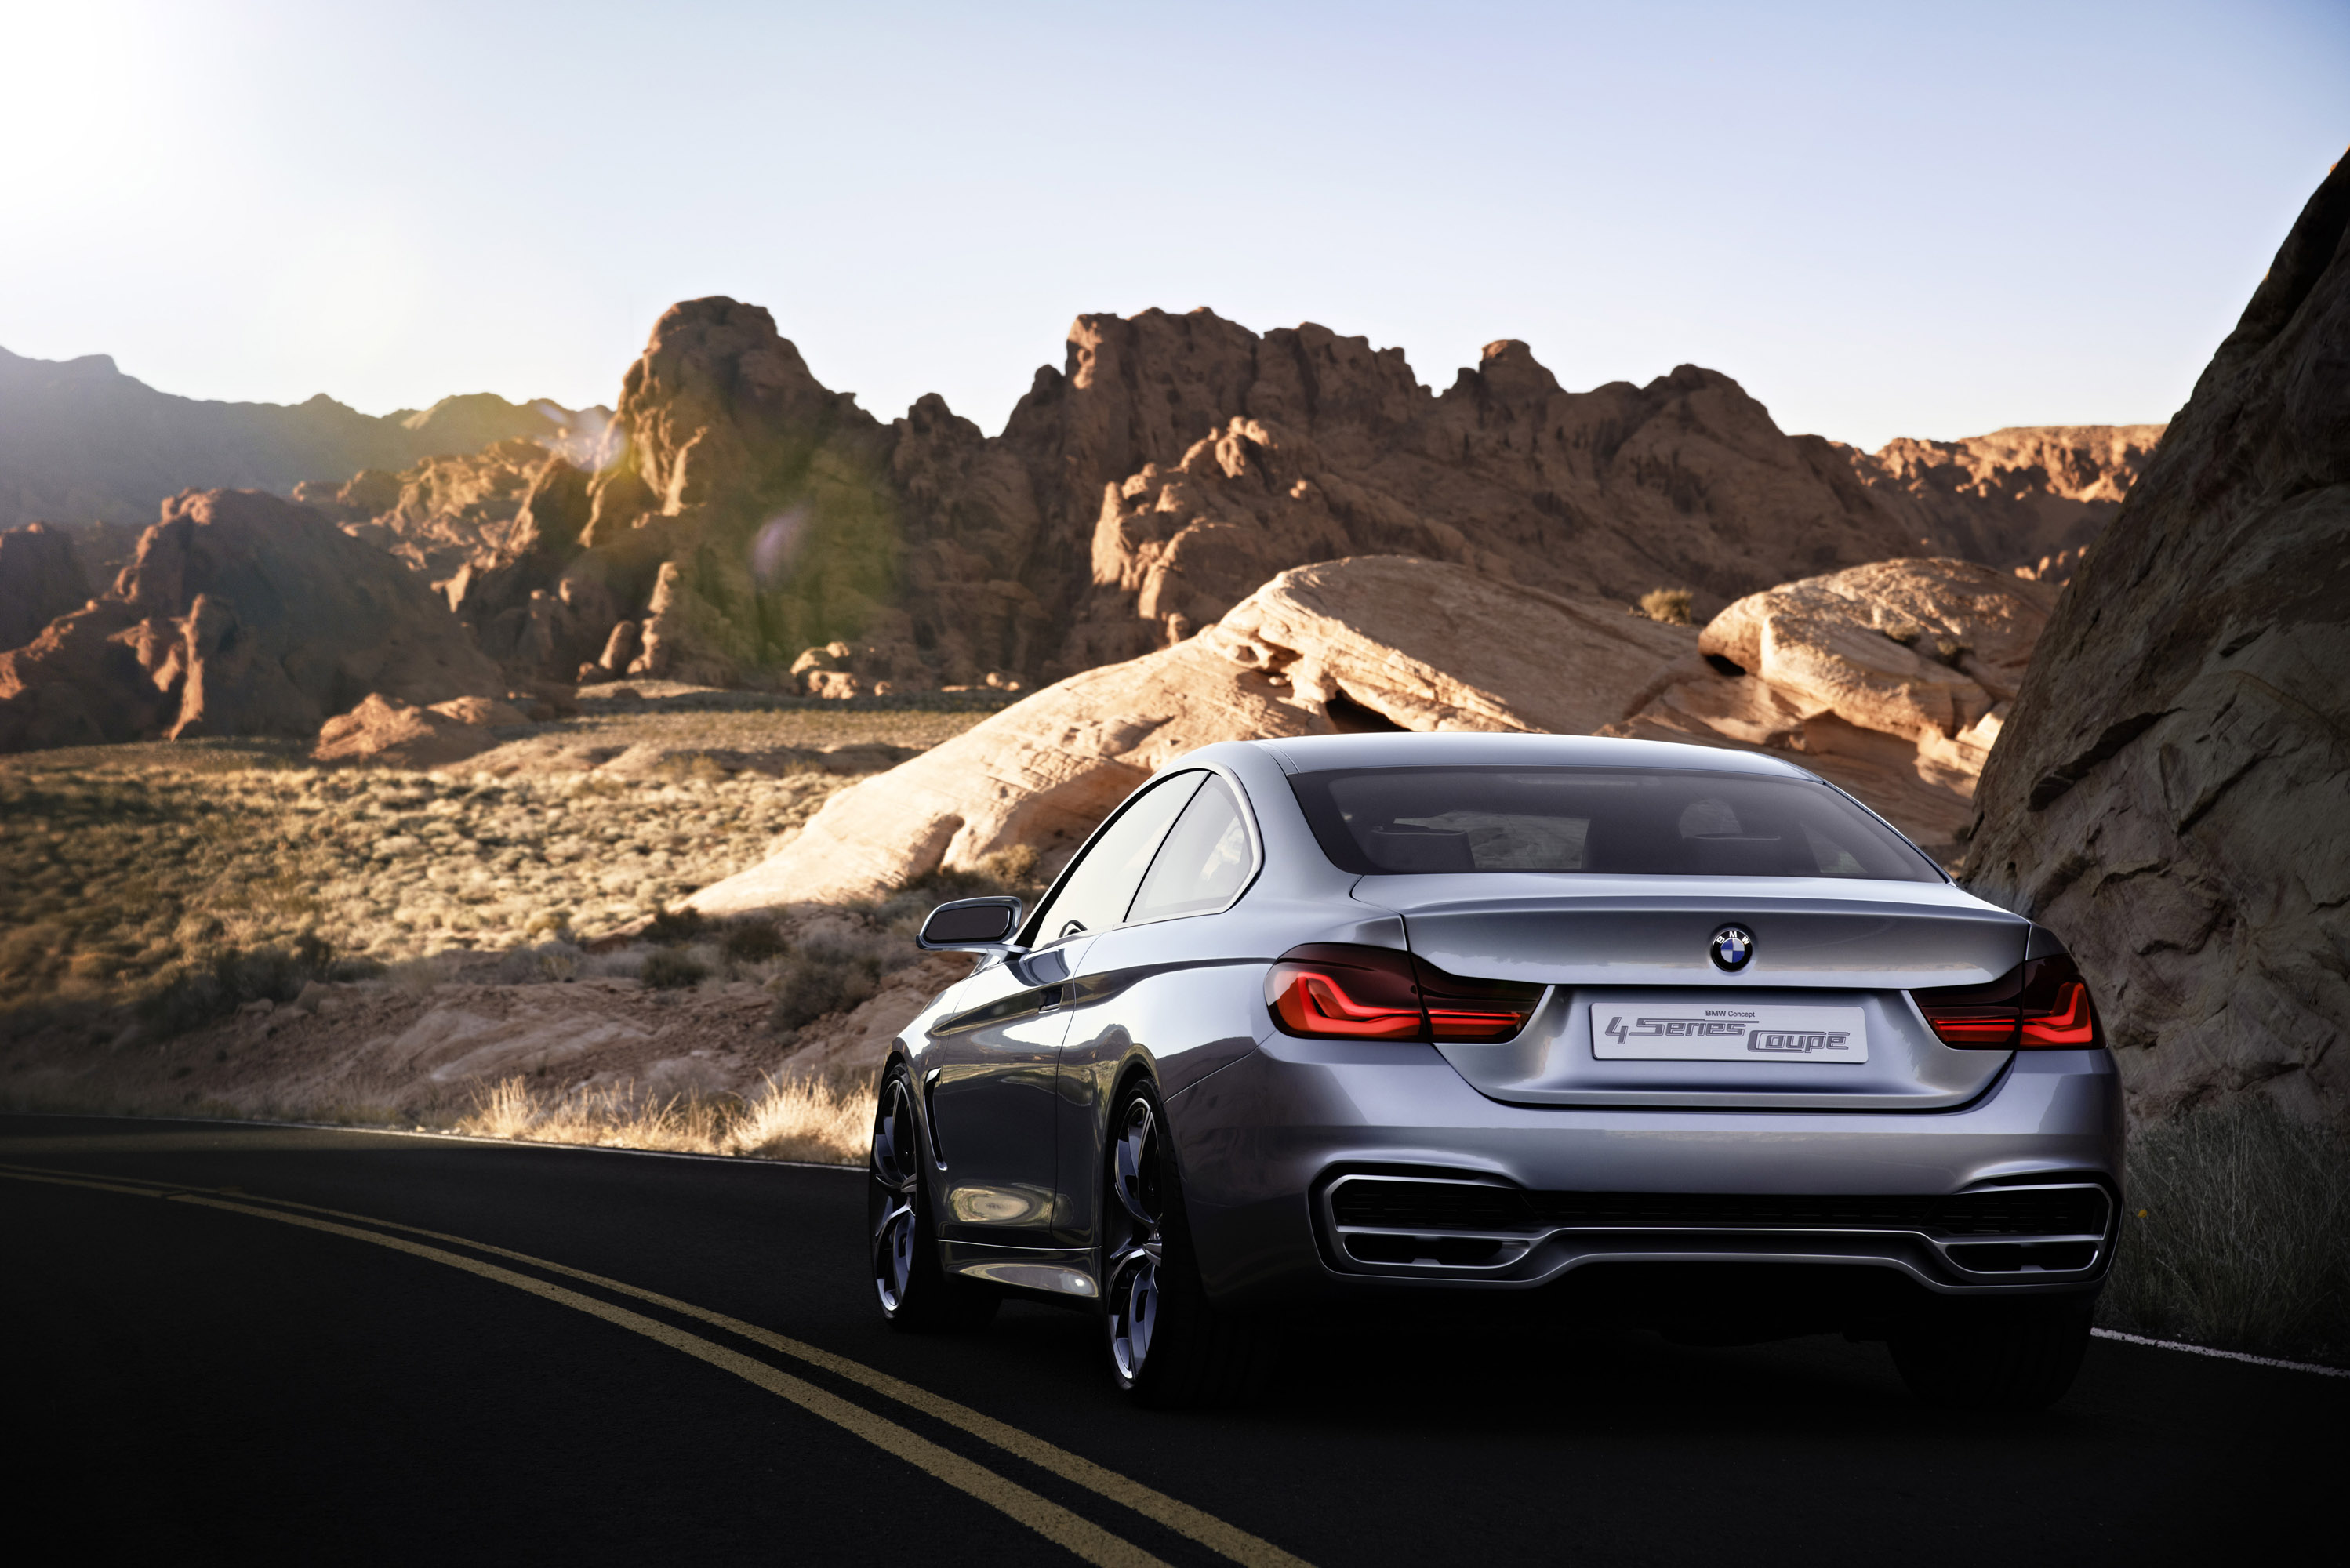 BMW Concept 4 Series Coupé Backgrounds on Wallpapers Vista